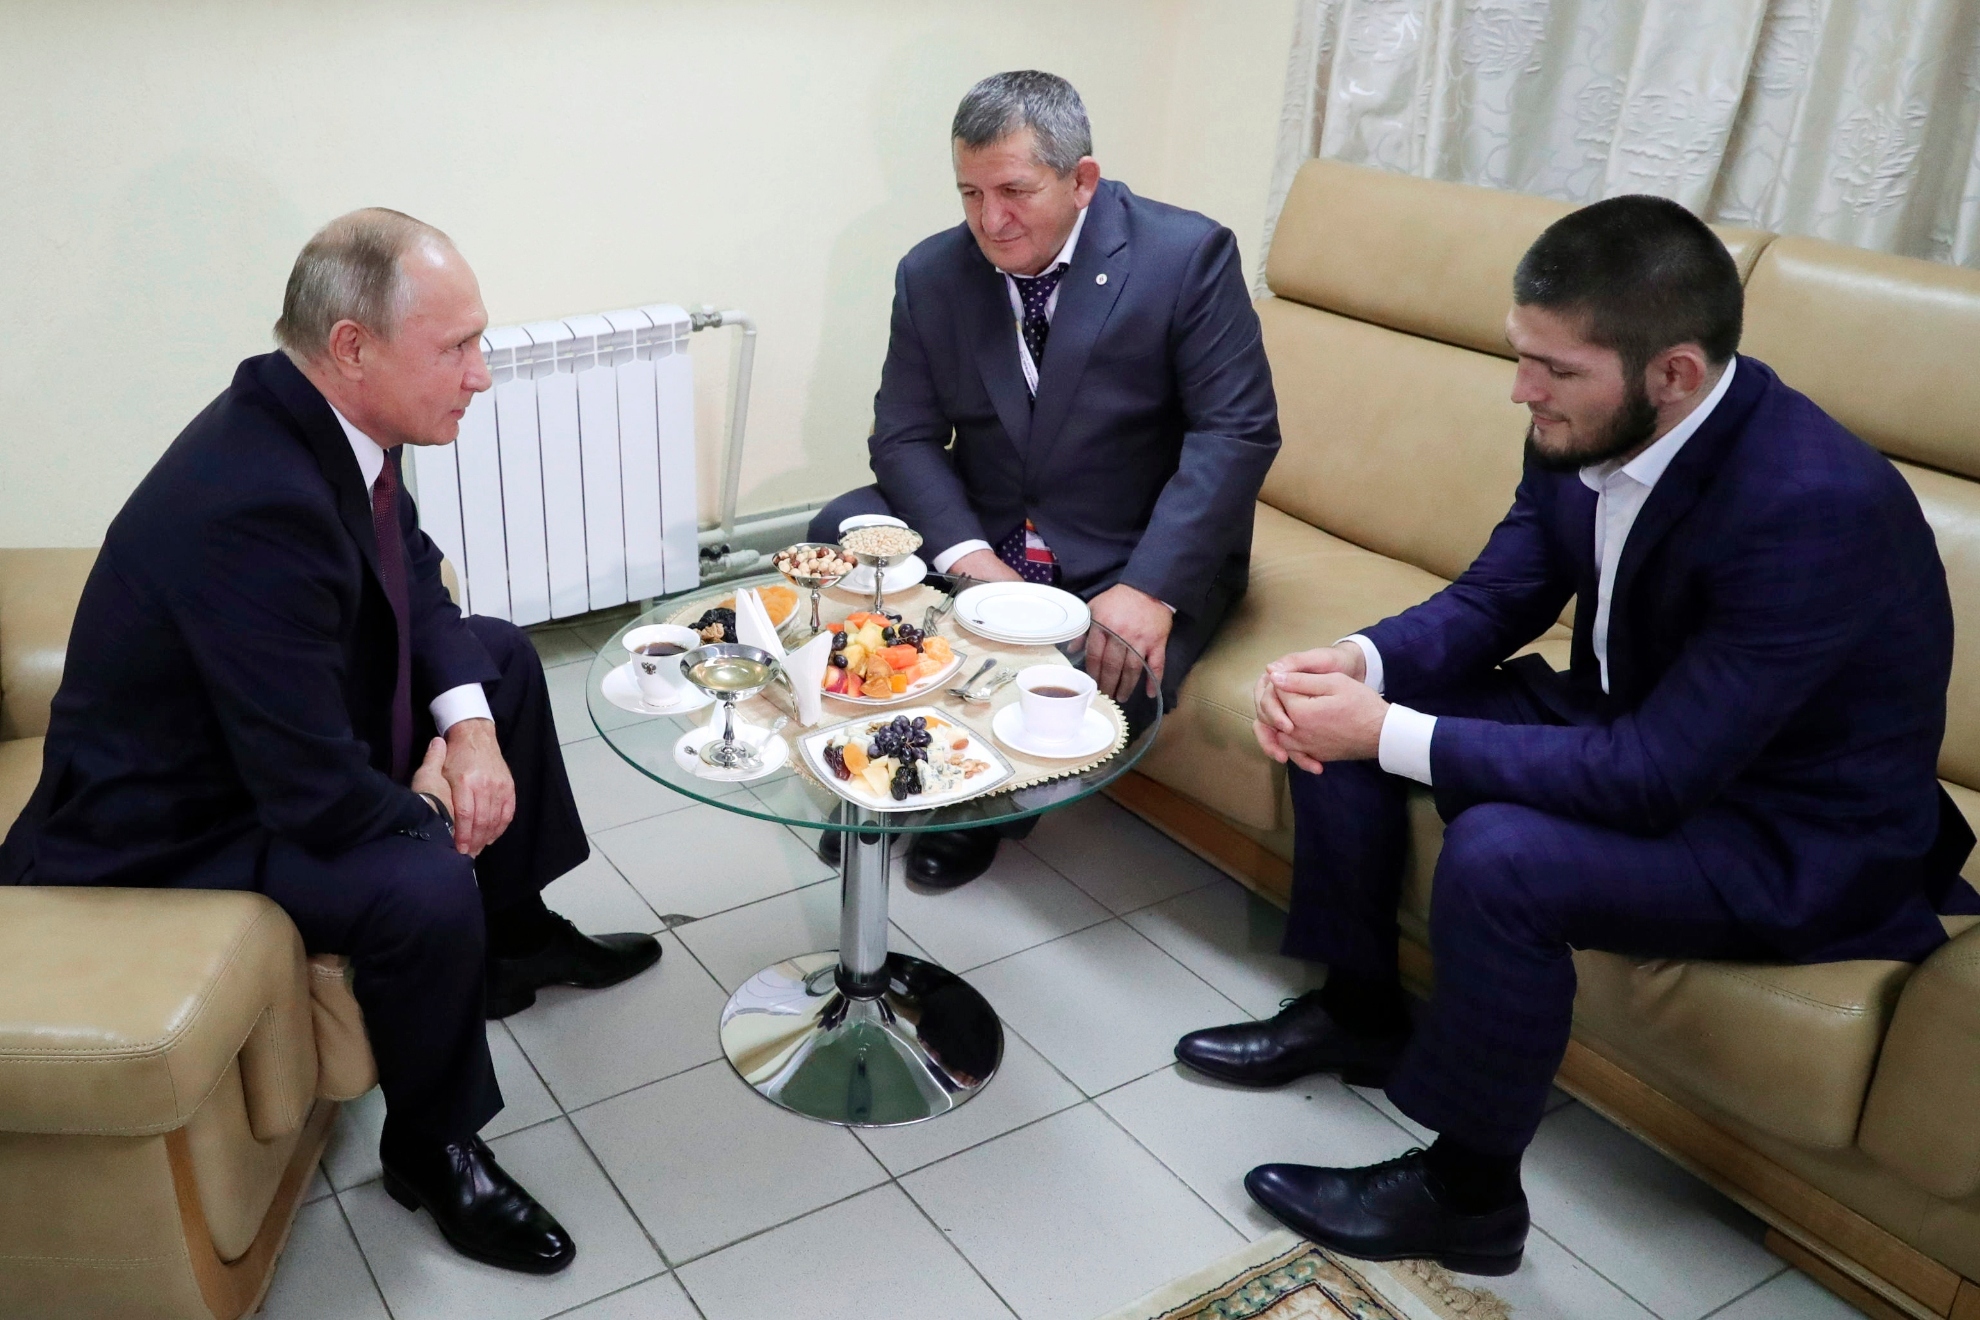 Khabib Nurmagomedov and Vladimir Putin at a meeting